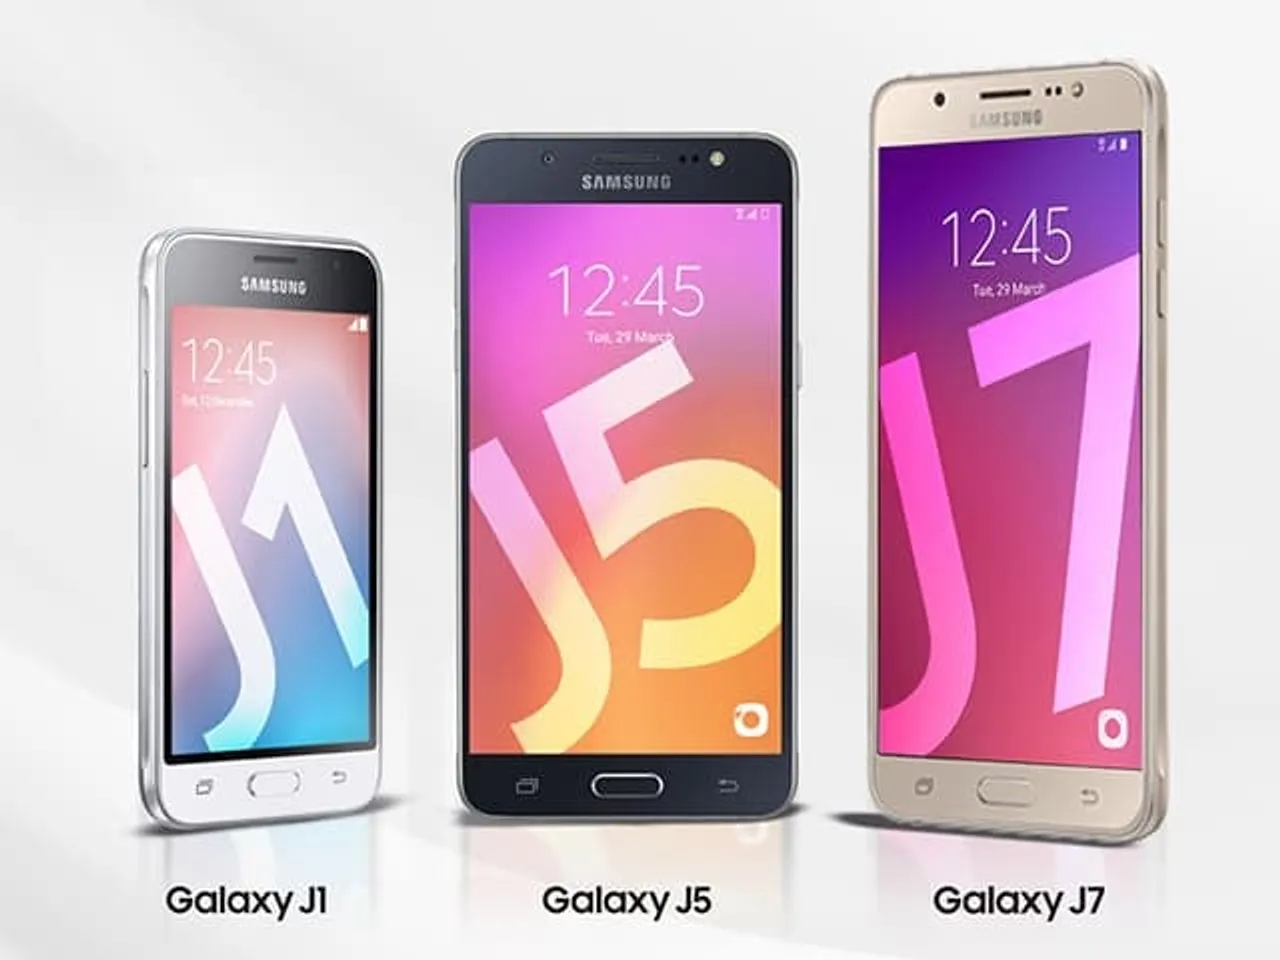 Samsung Galaxy J series users